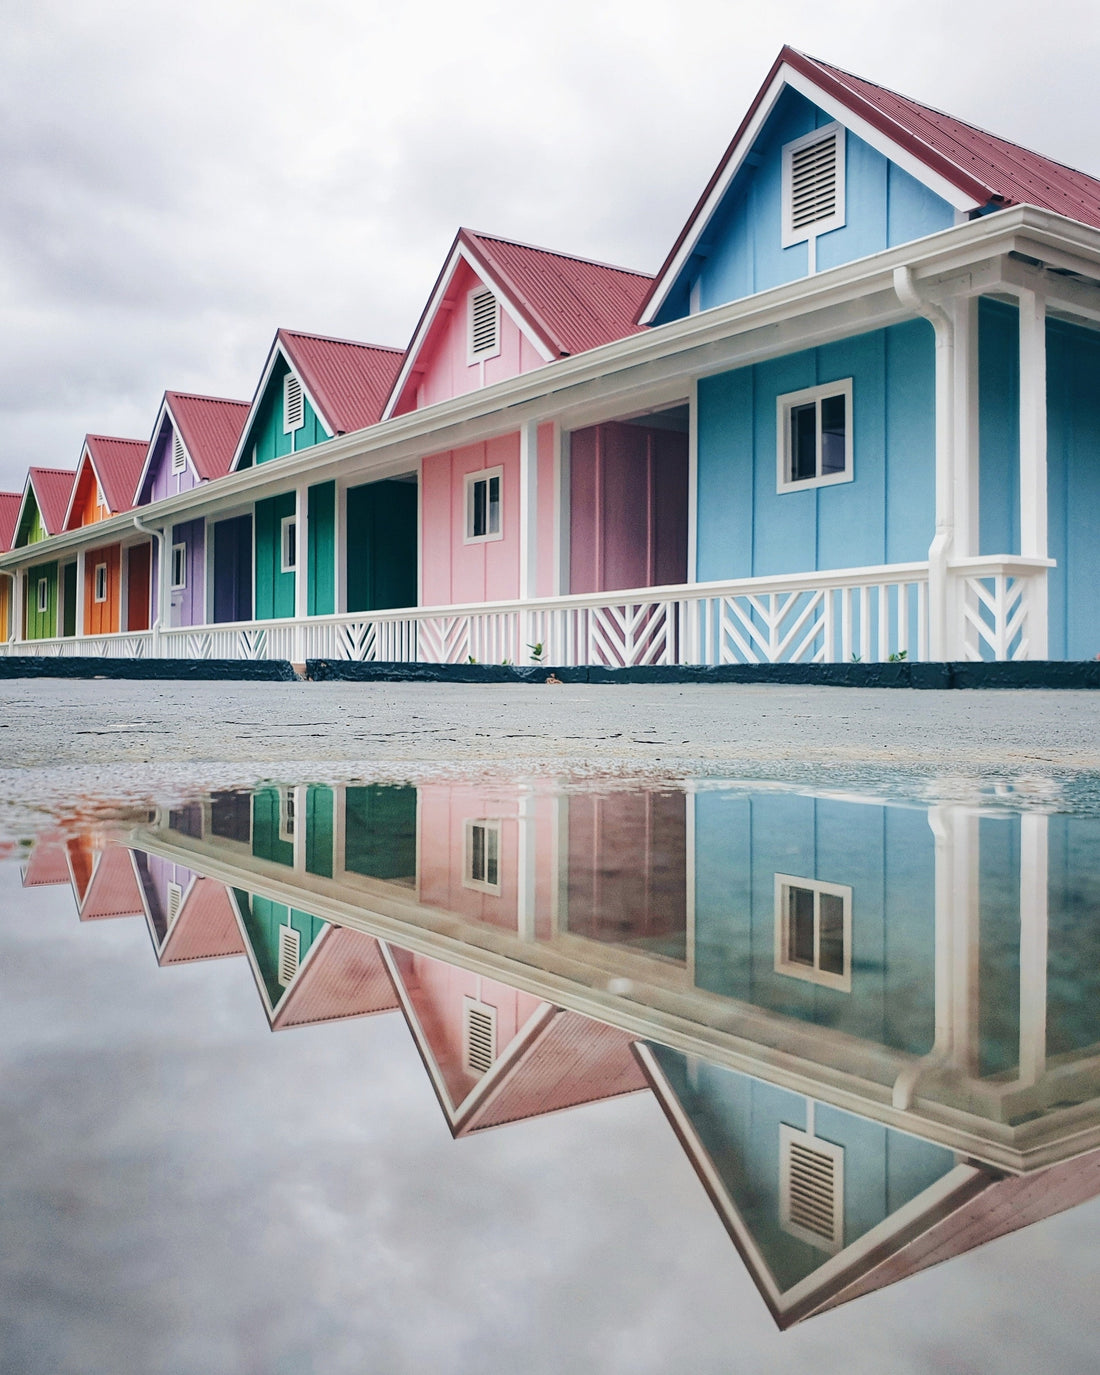 Colorful houses along a beach.